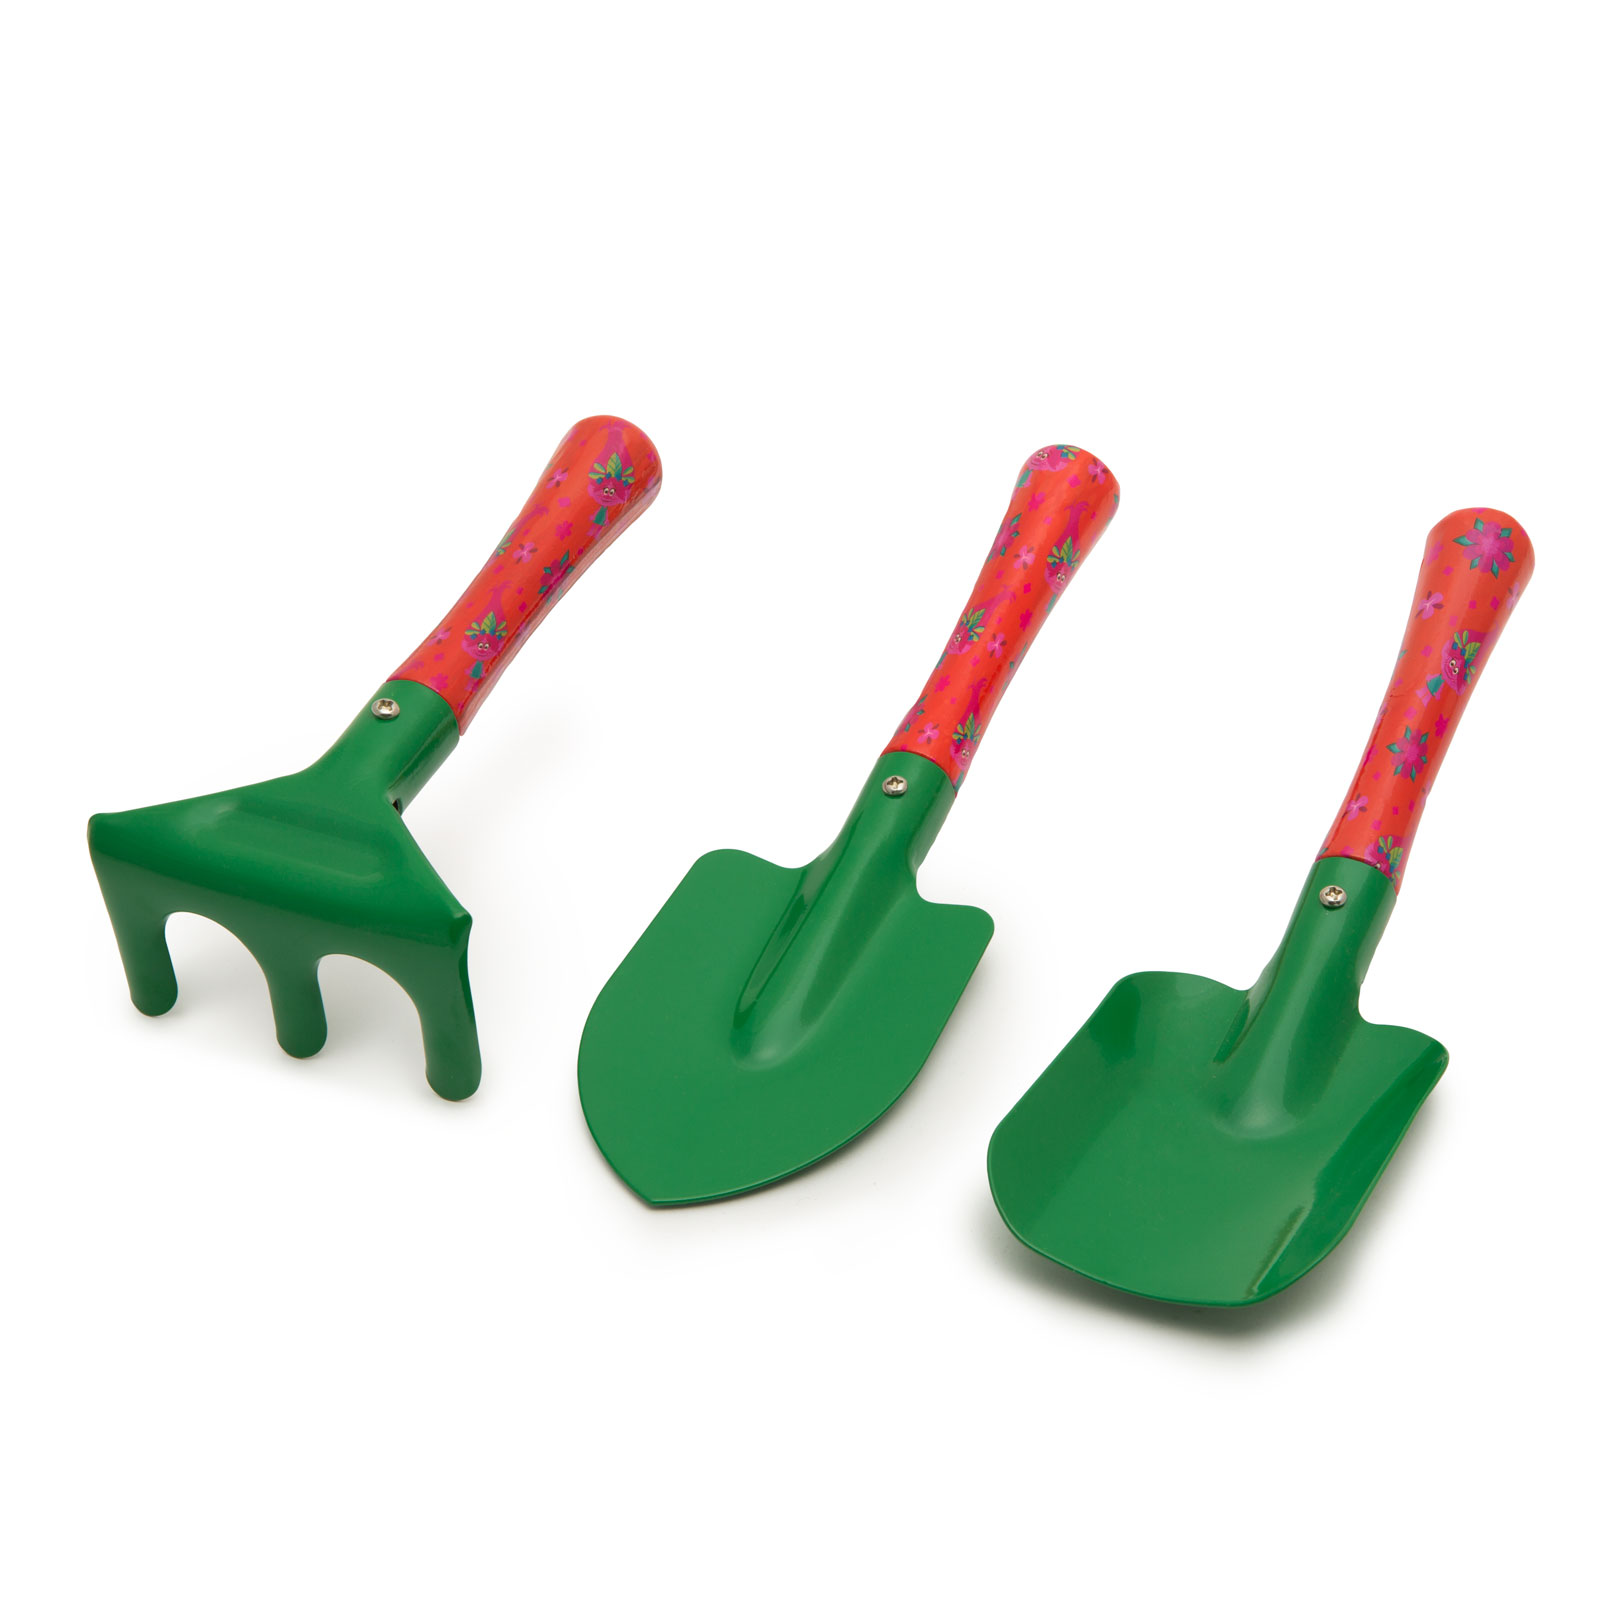 Garden tool set for children - 3 pieces thumb